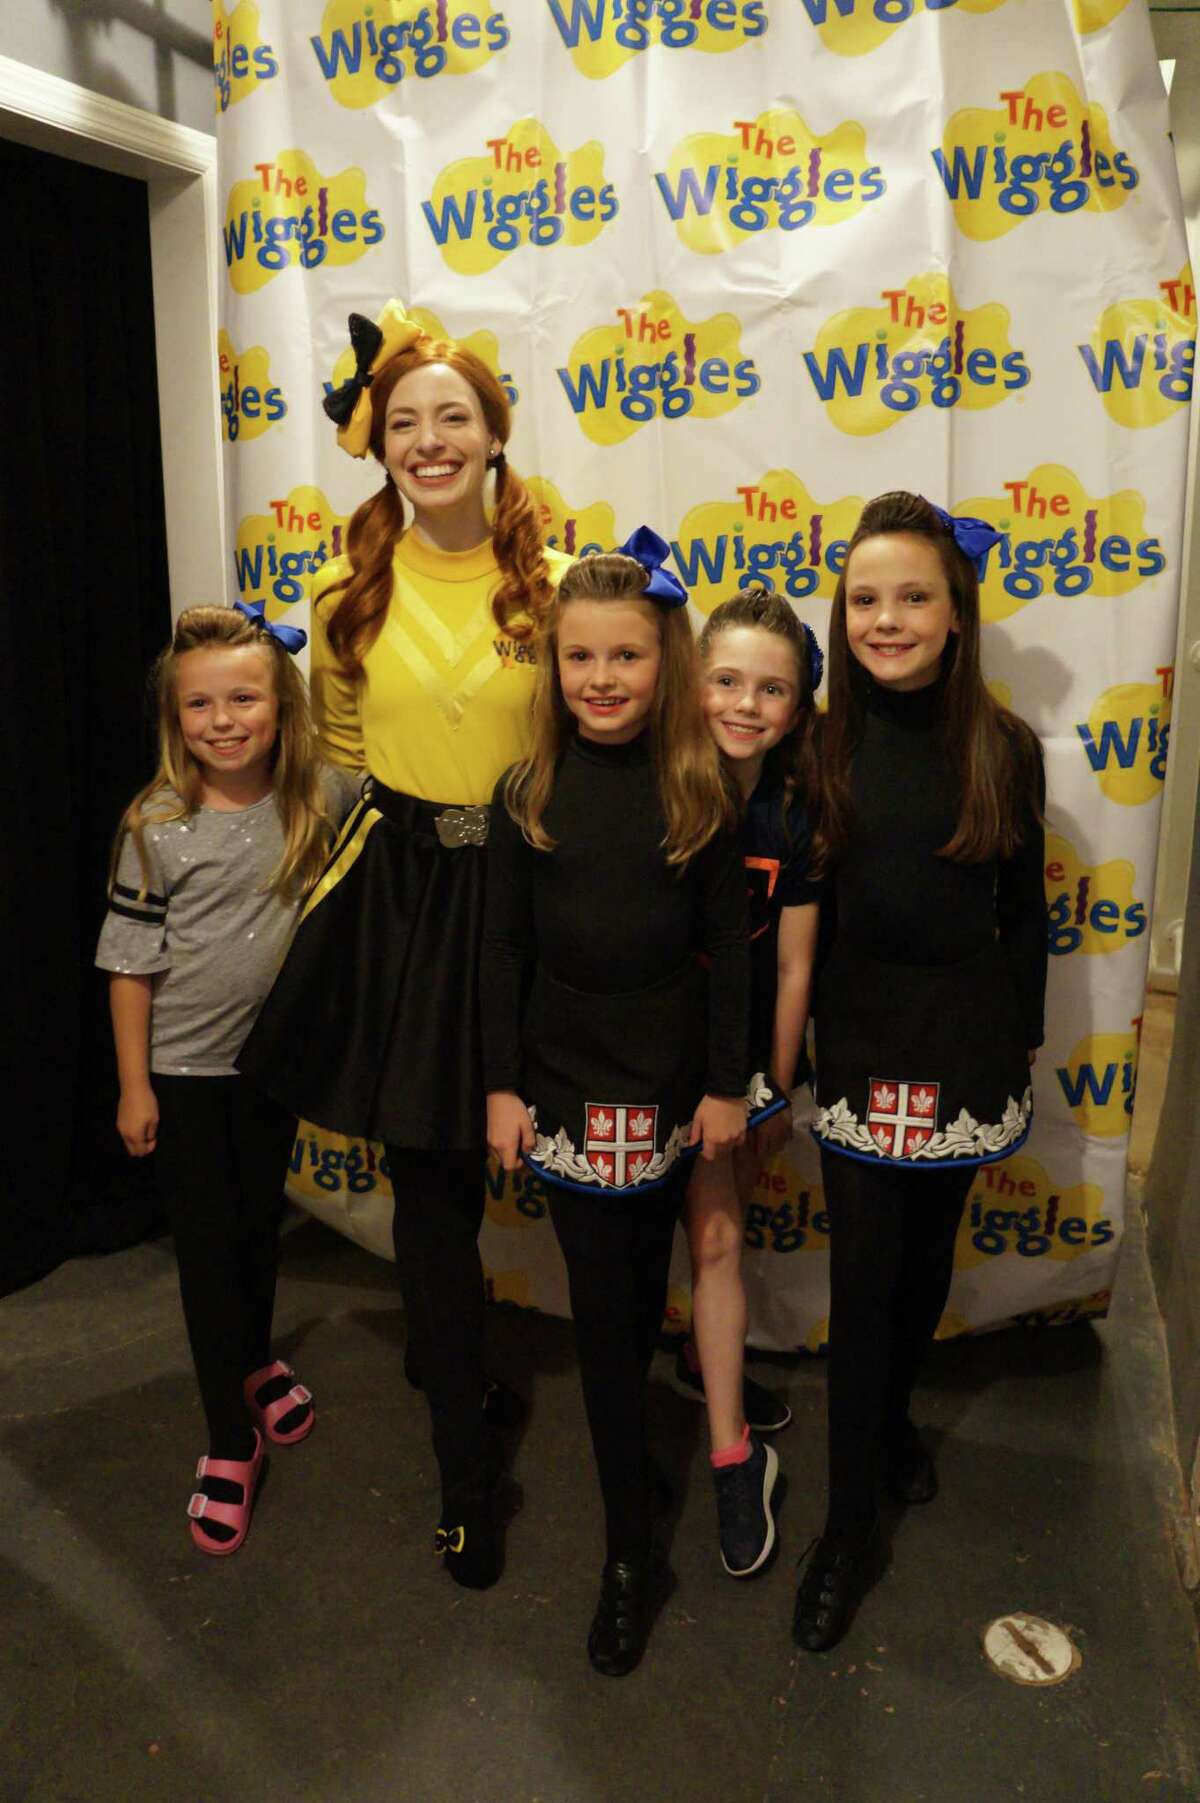 Emma Wiggle with Ashurst Academy dancers Vivian Eaton (Newtown), Caroline Morneau (Danbury), Lucy Lowman (Ridgefield) and Adeline Gibowicz (Danbury)